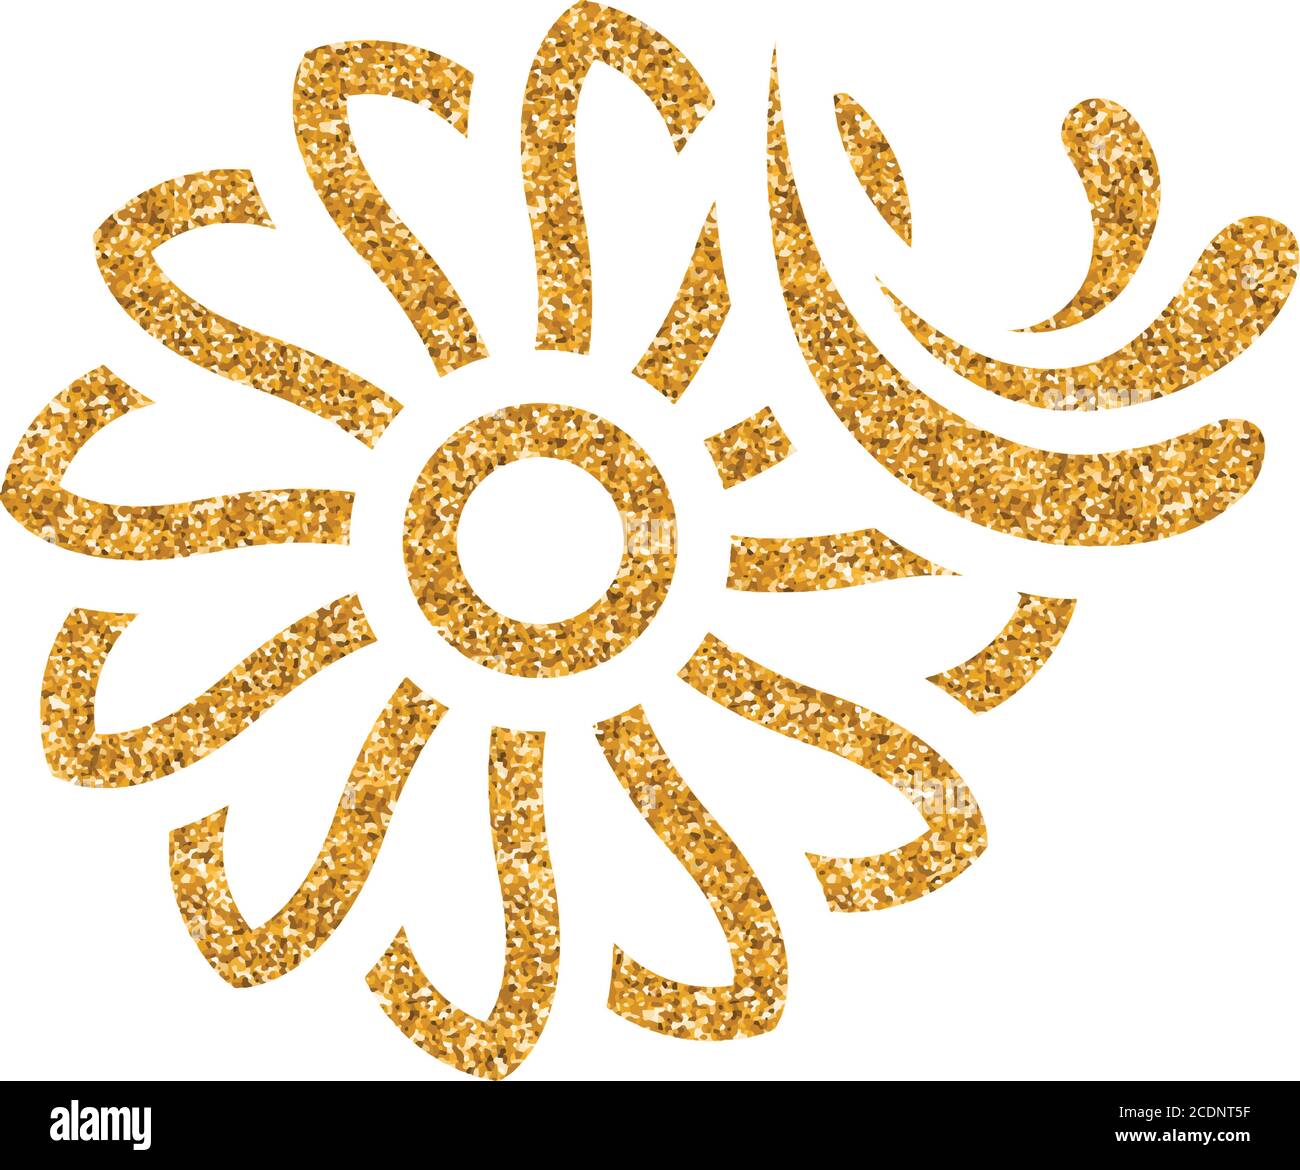 Water turbine icon in gold glitter texture. Sparkle luxury style vector illustration. Stock Vector